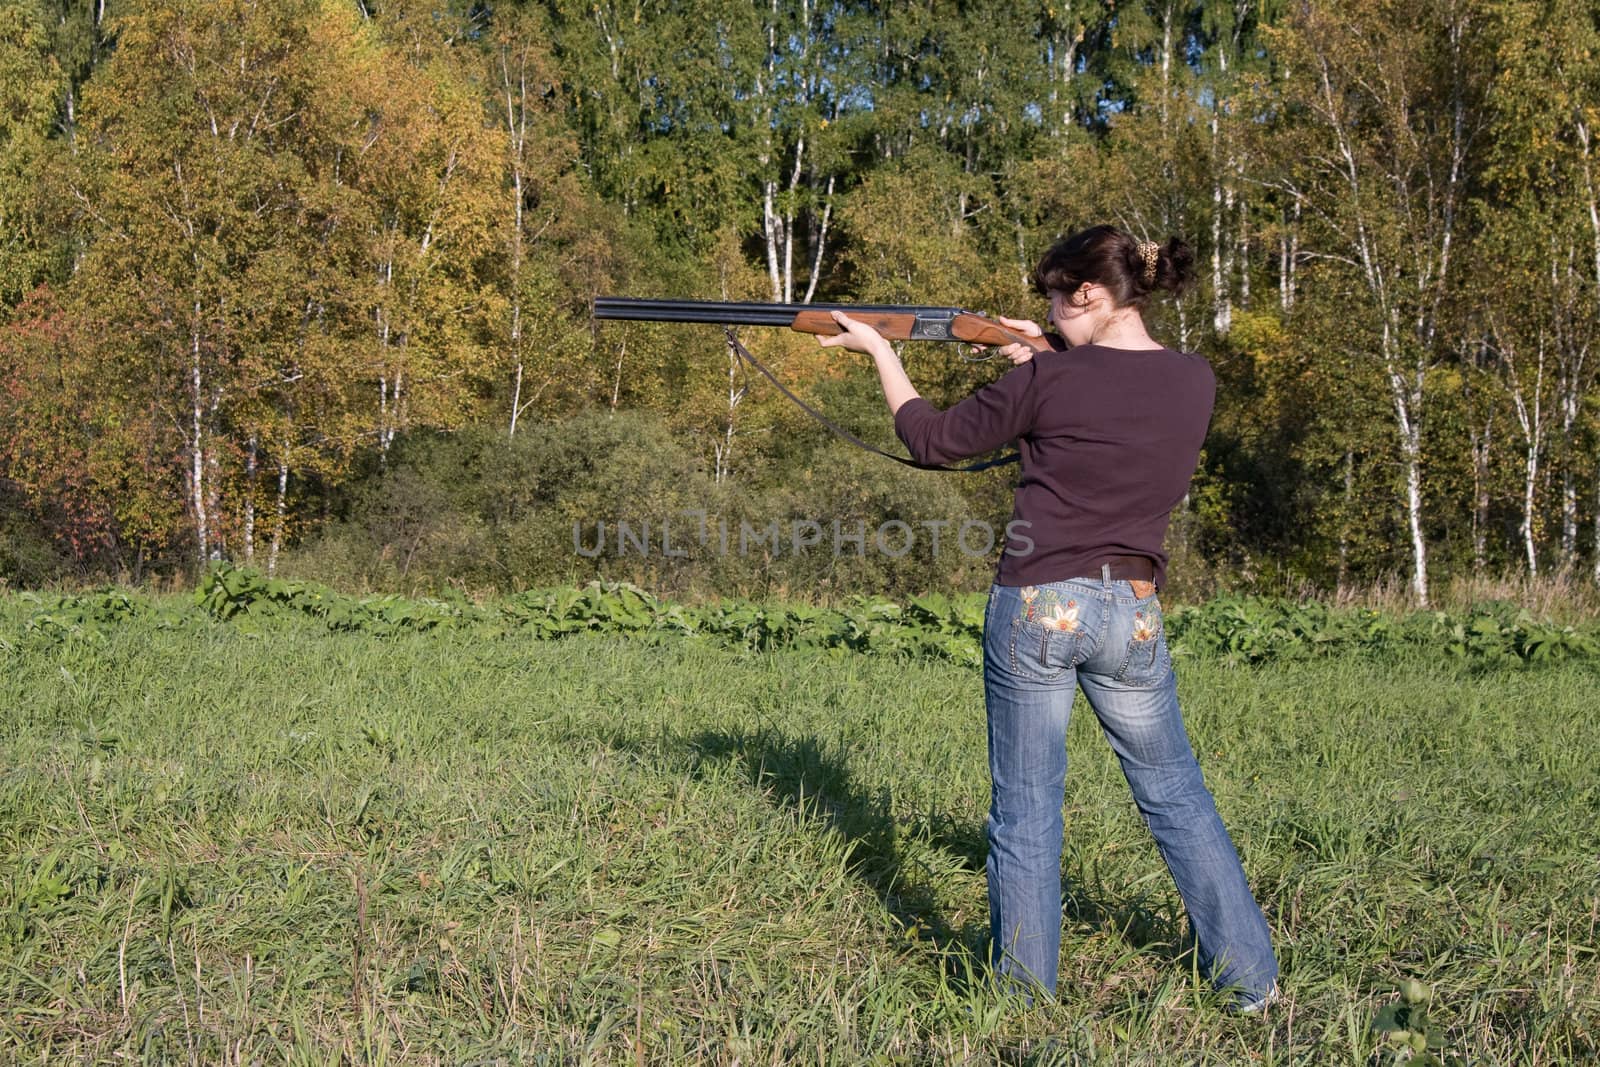 The girl aims from a gun at a targetnd